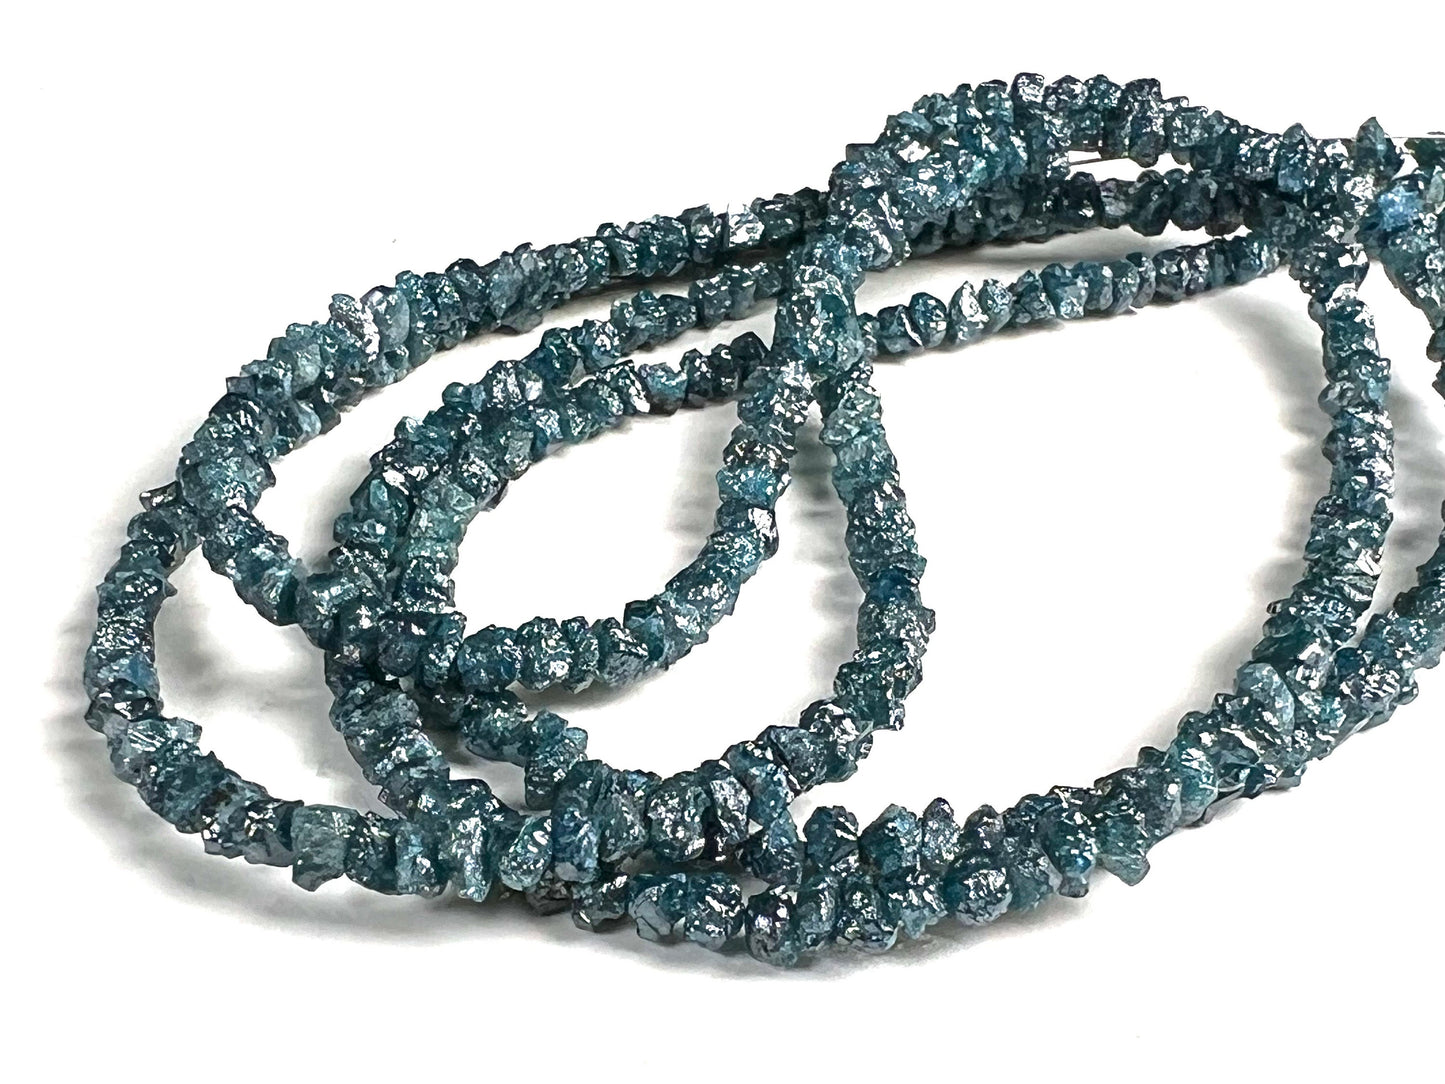 Natural Blue Diamond Raw Uncut nugget bead, AAA Quality 3.5-4mm Large size Raw Diamond nugget bead for Jewelry making , healing 4”,8”